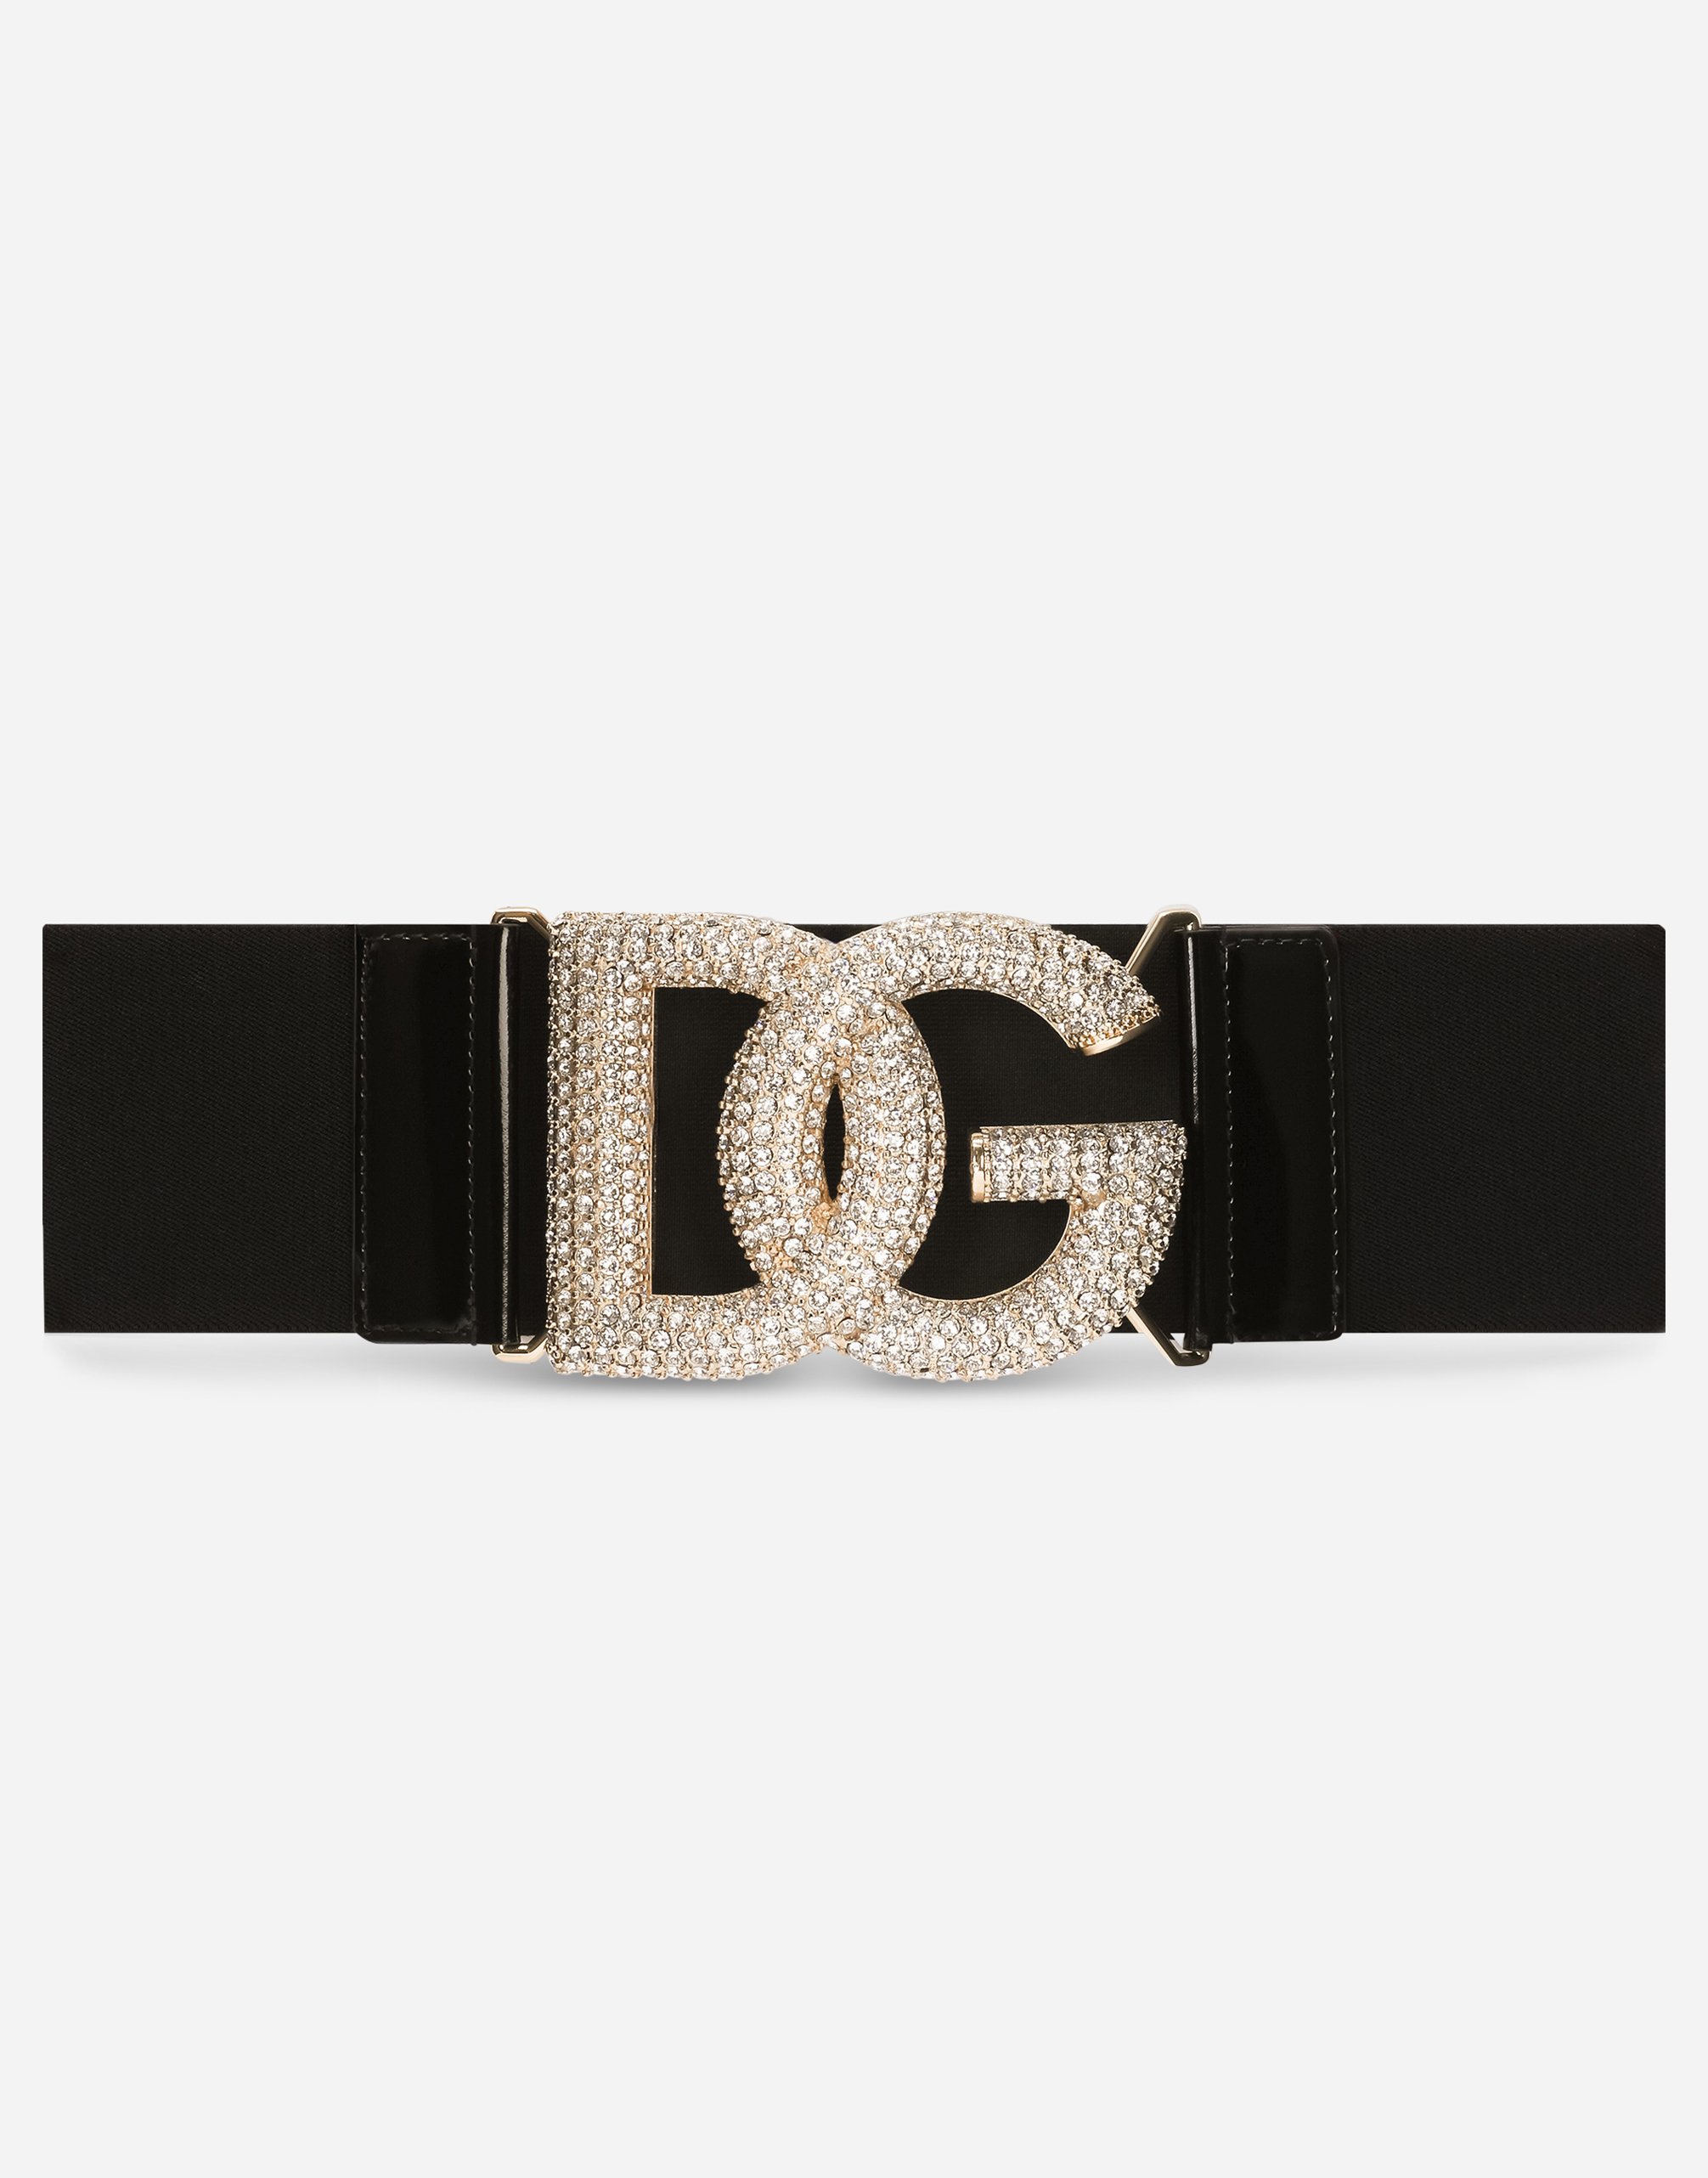 Elasticated belt with crystal DG buckle in Black